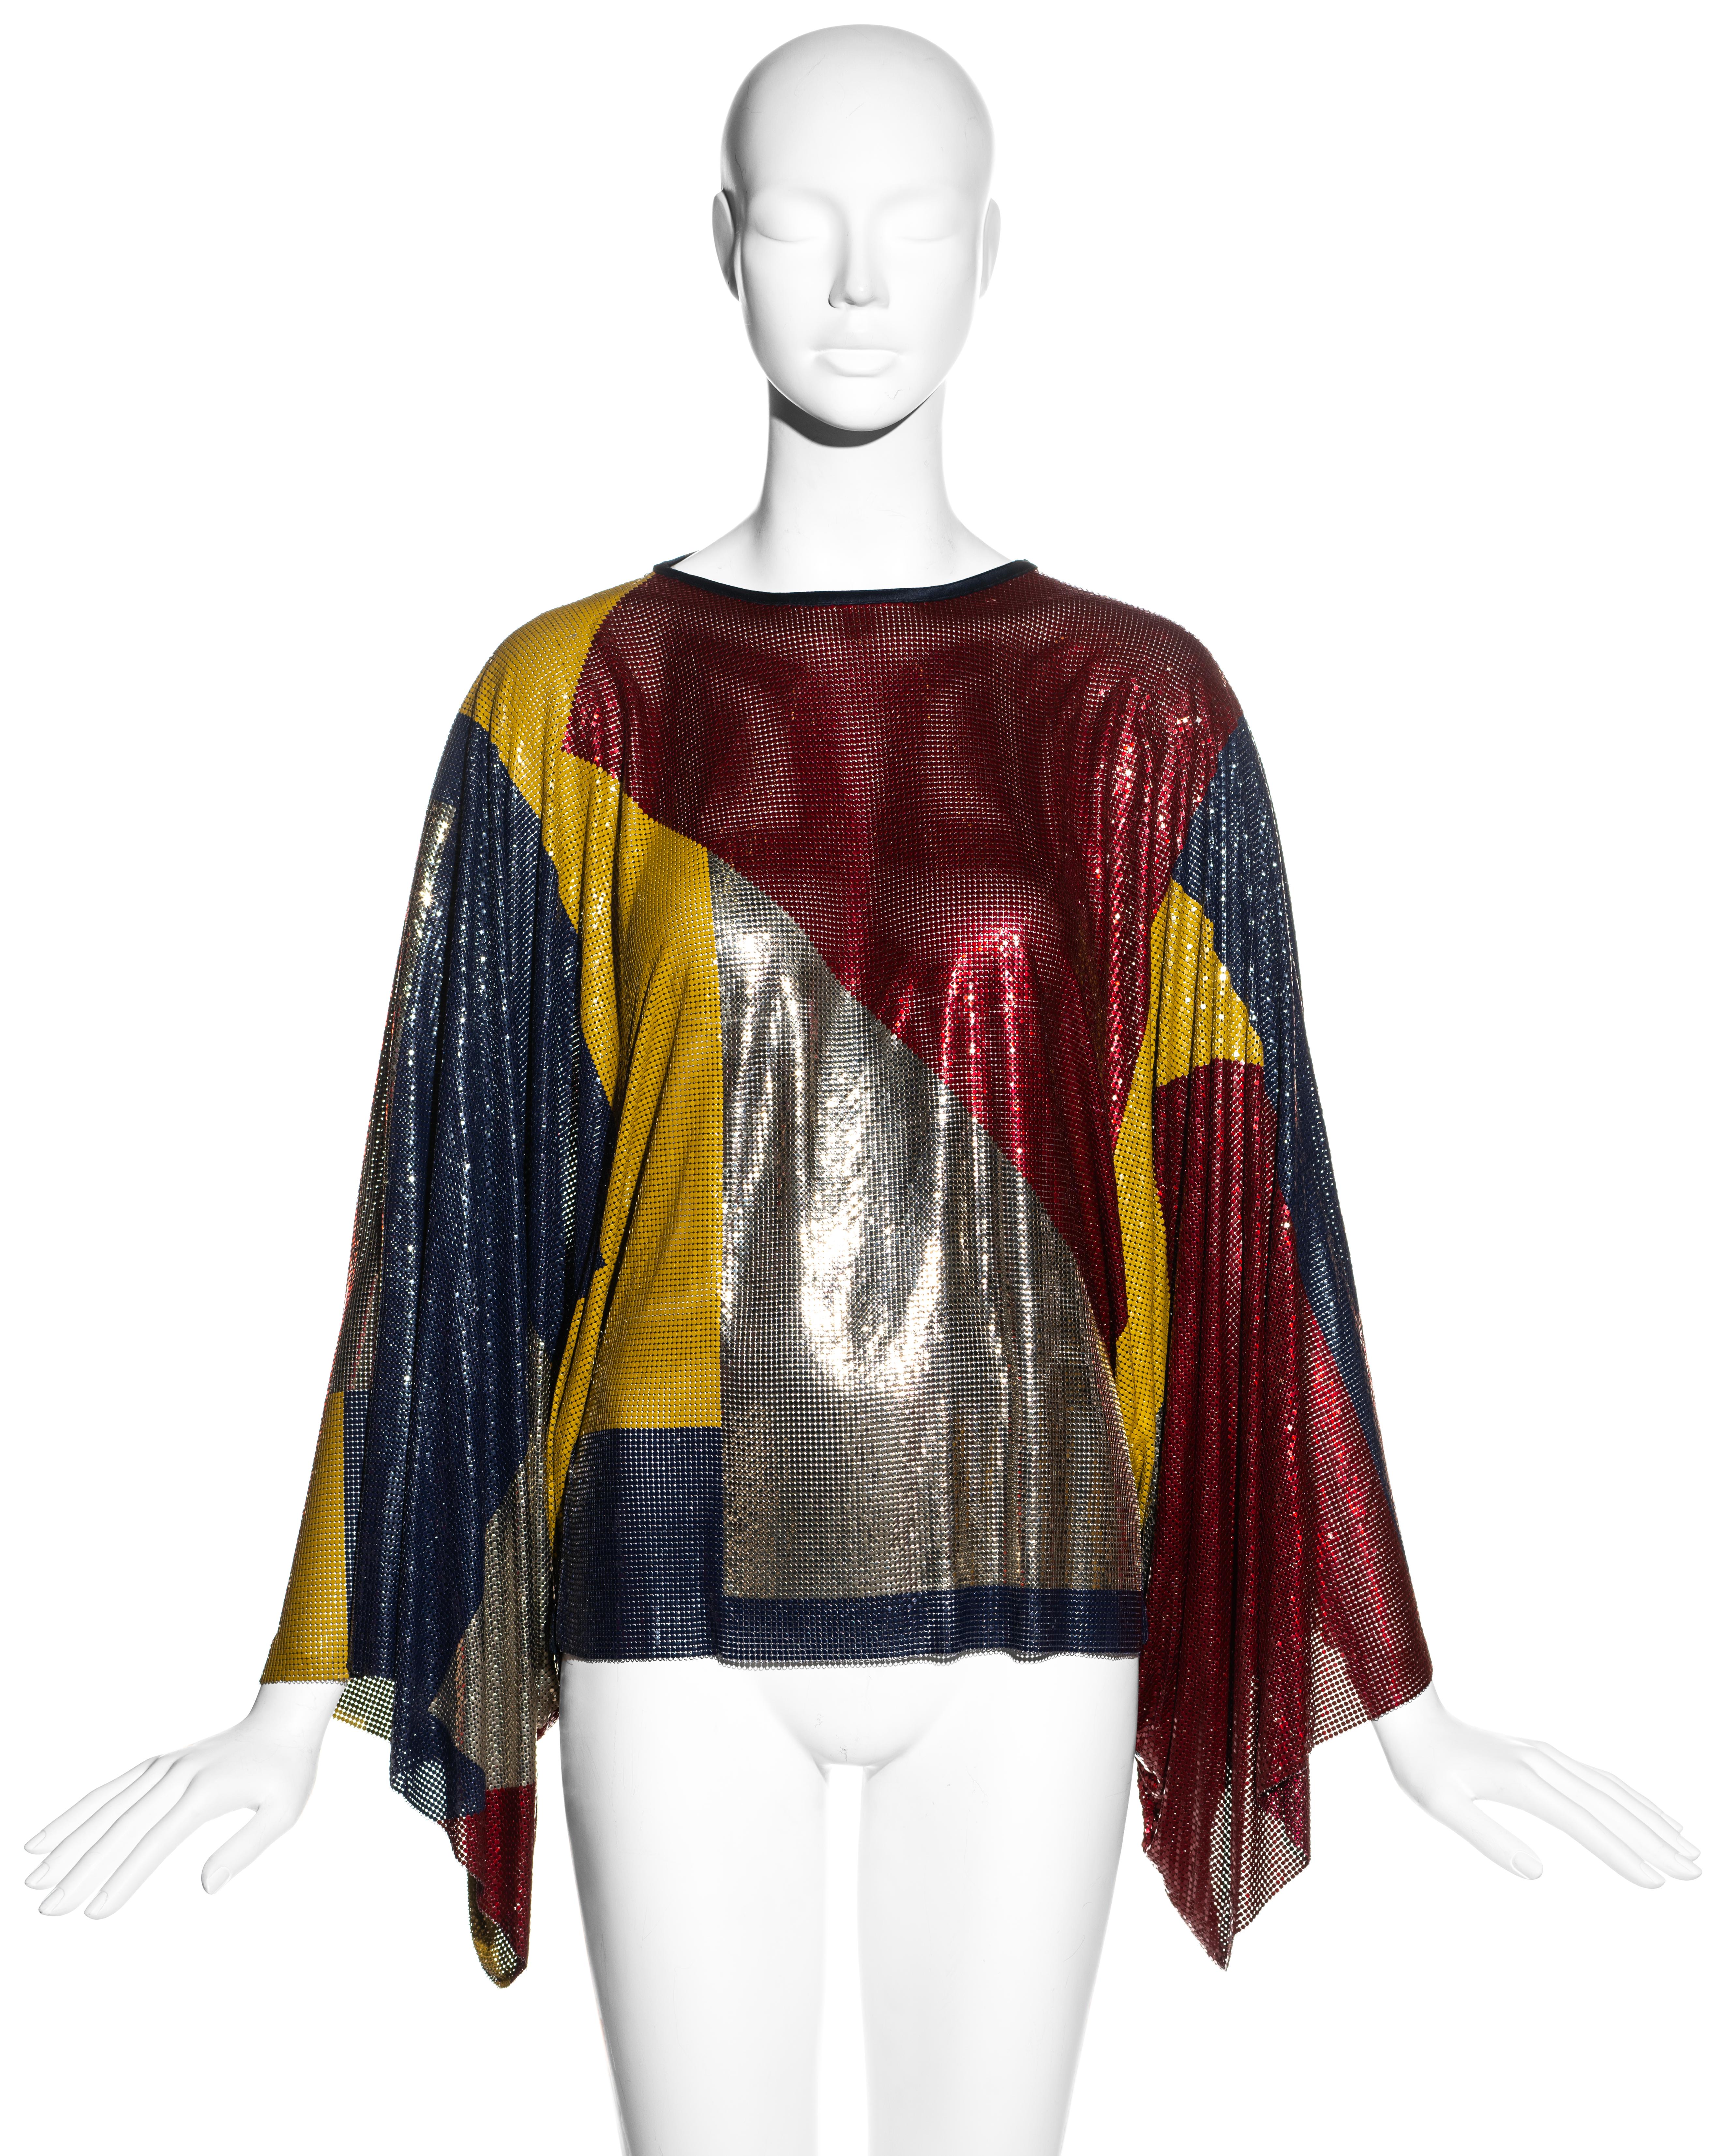 ▪ Gianni Versace multicoloured Oroton chainmail evening tunic
▪ 100% Aluminium, 100% Silk
▪ Wide sleeves 
▪ Silk trim 
▪ Size Small - Medium
▪ Fall-Winter 1984